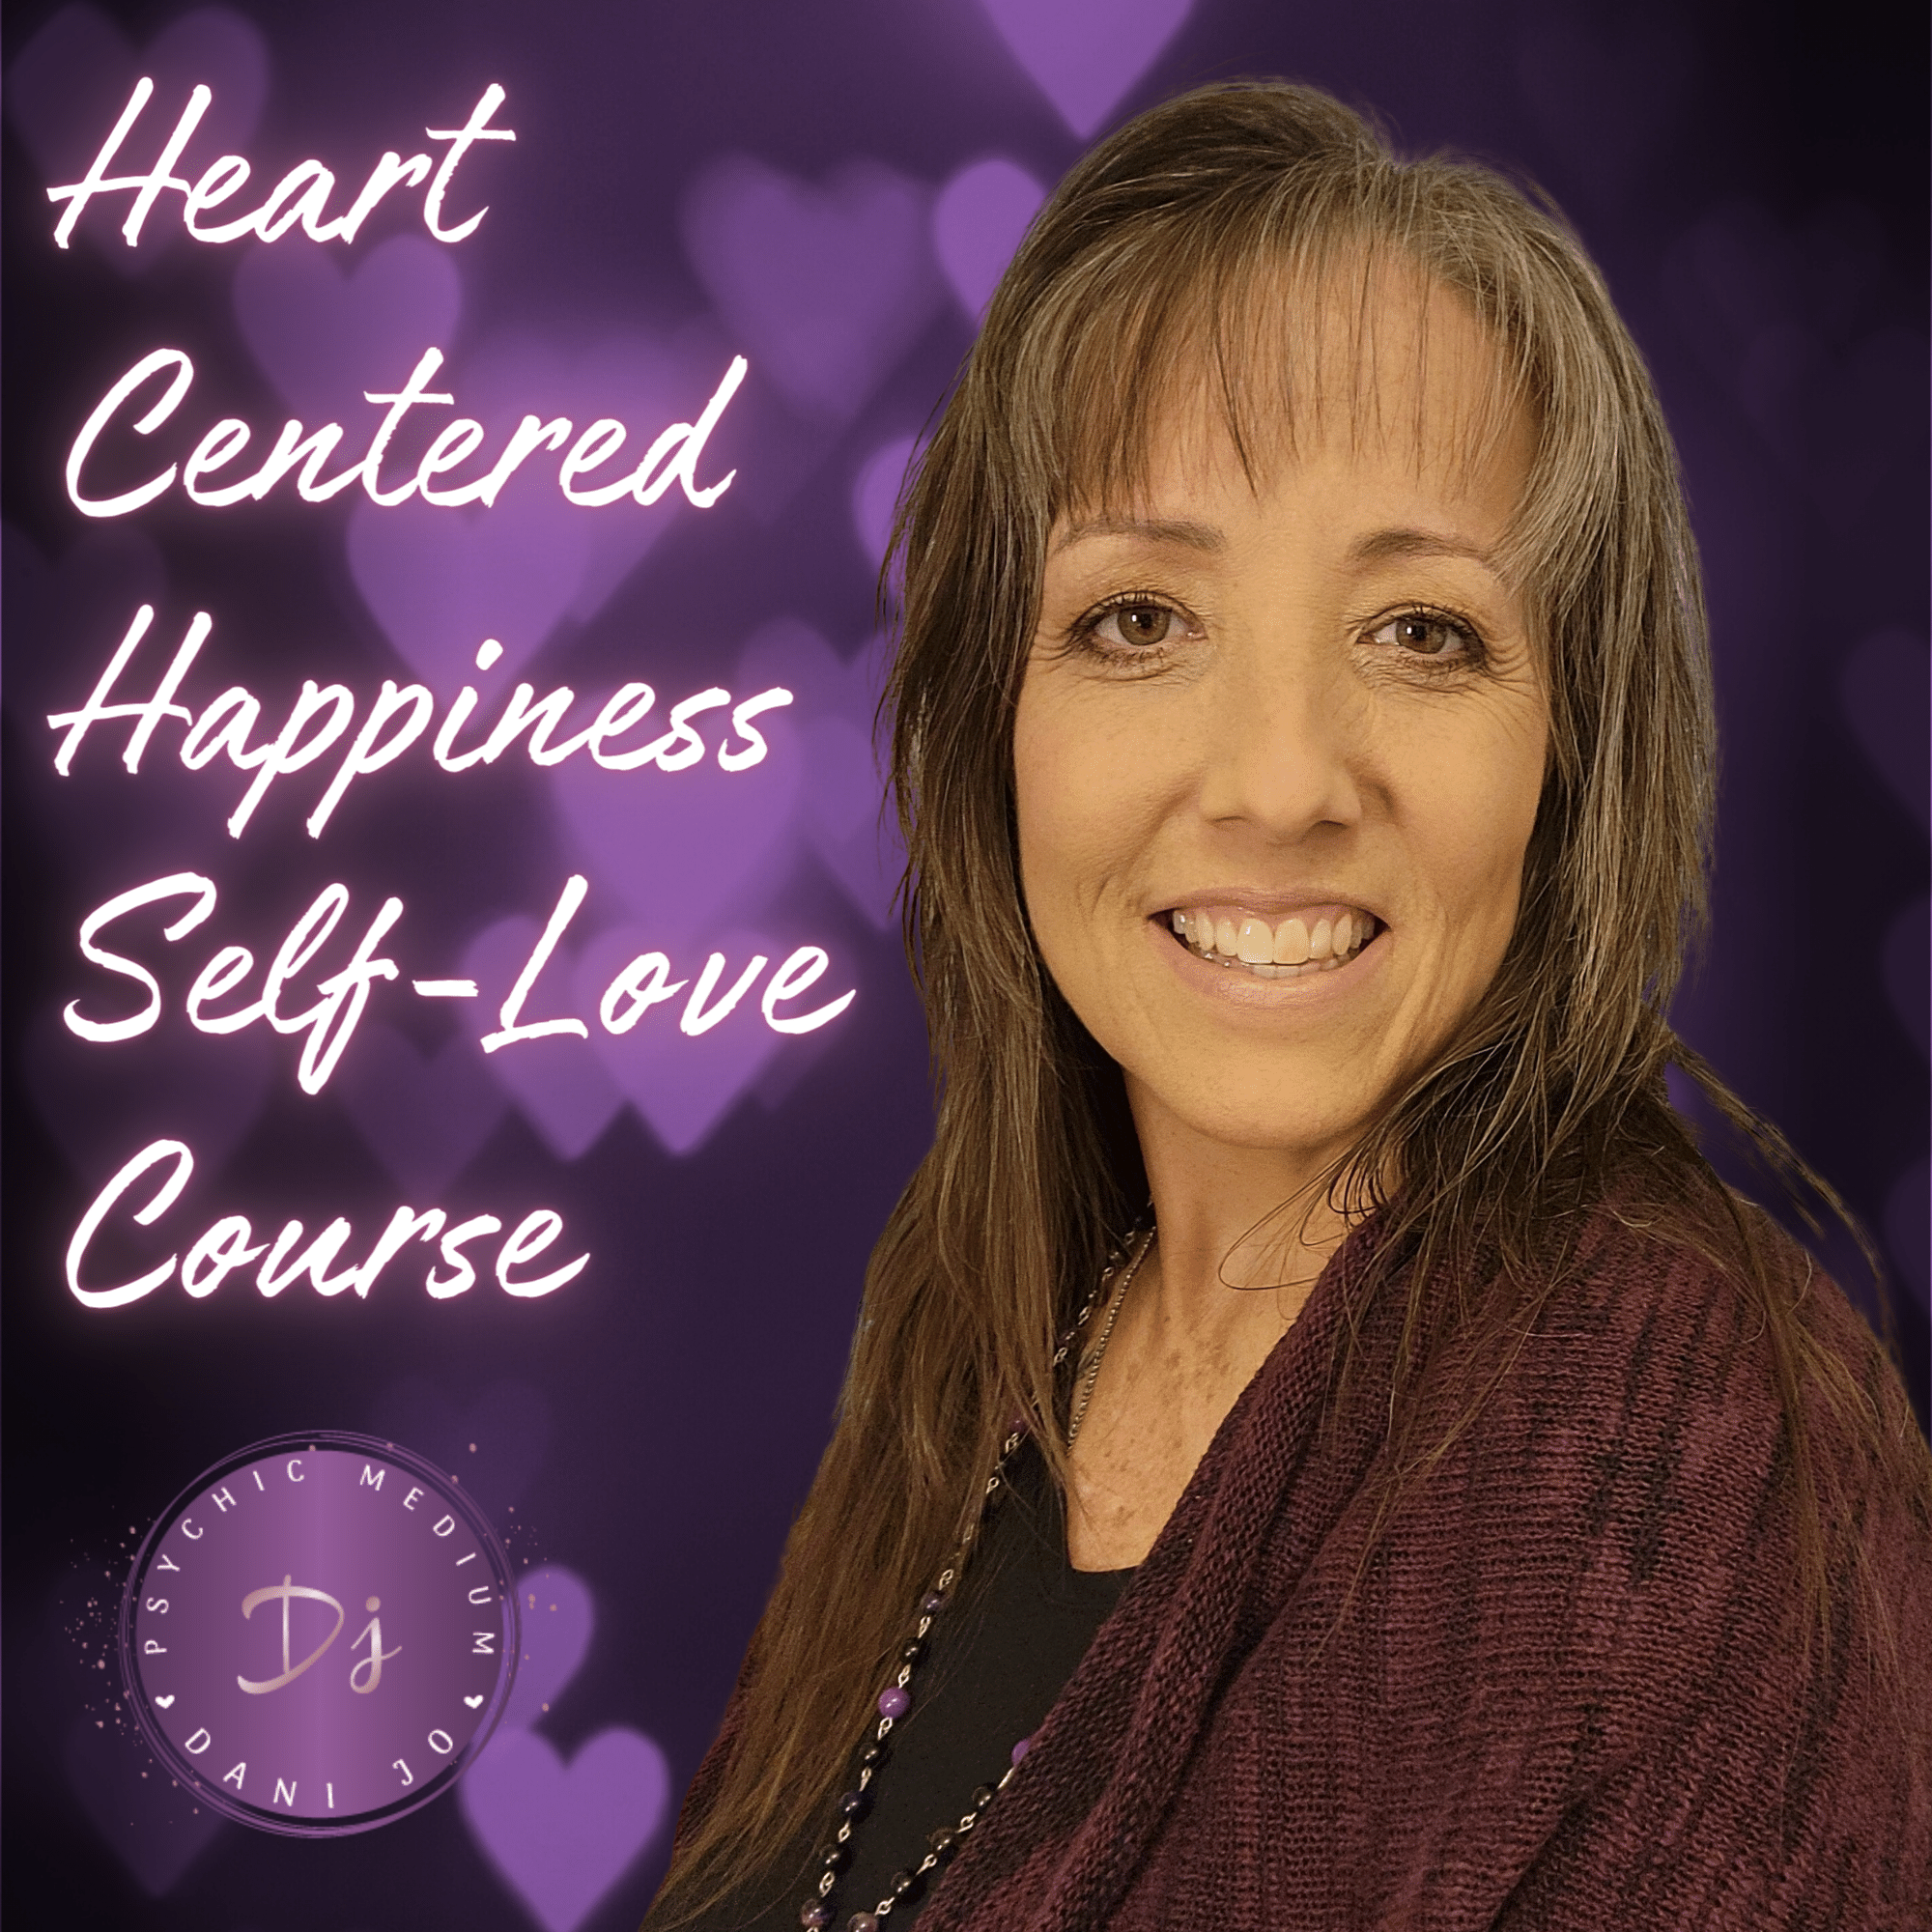 Heart Centered Happiness Self Love Course - Psychic Medium Dani Jo